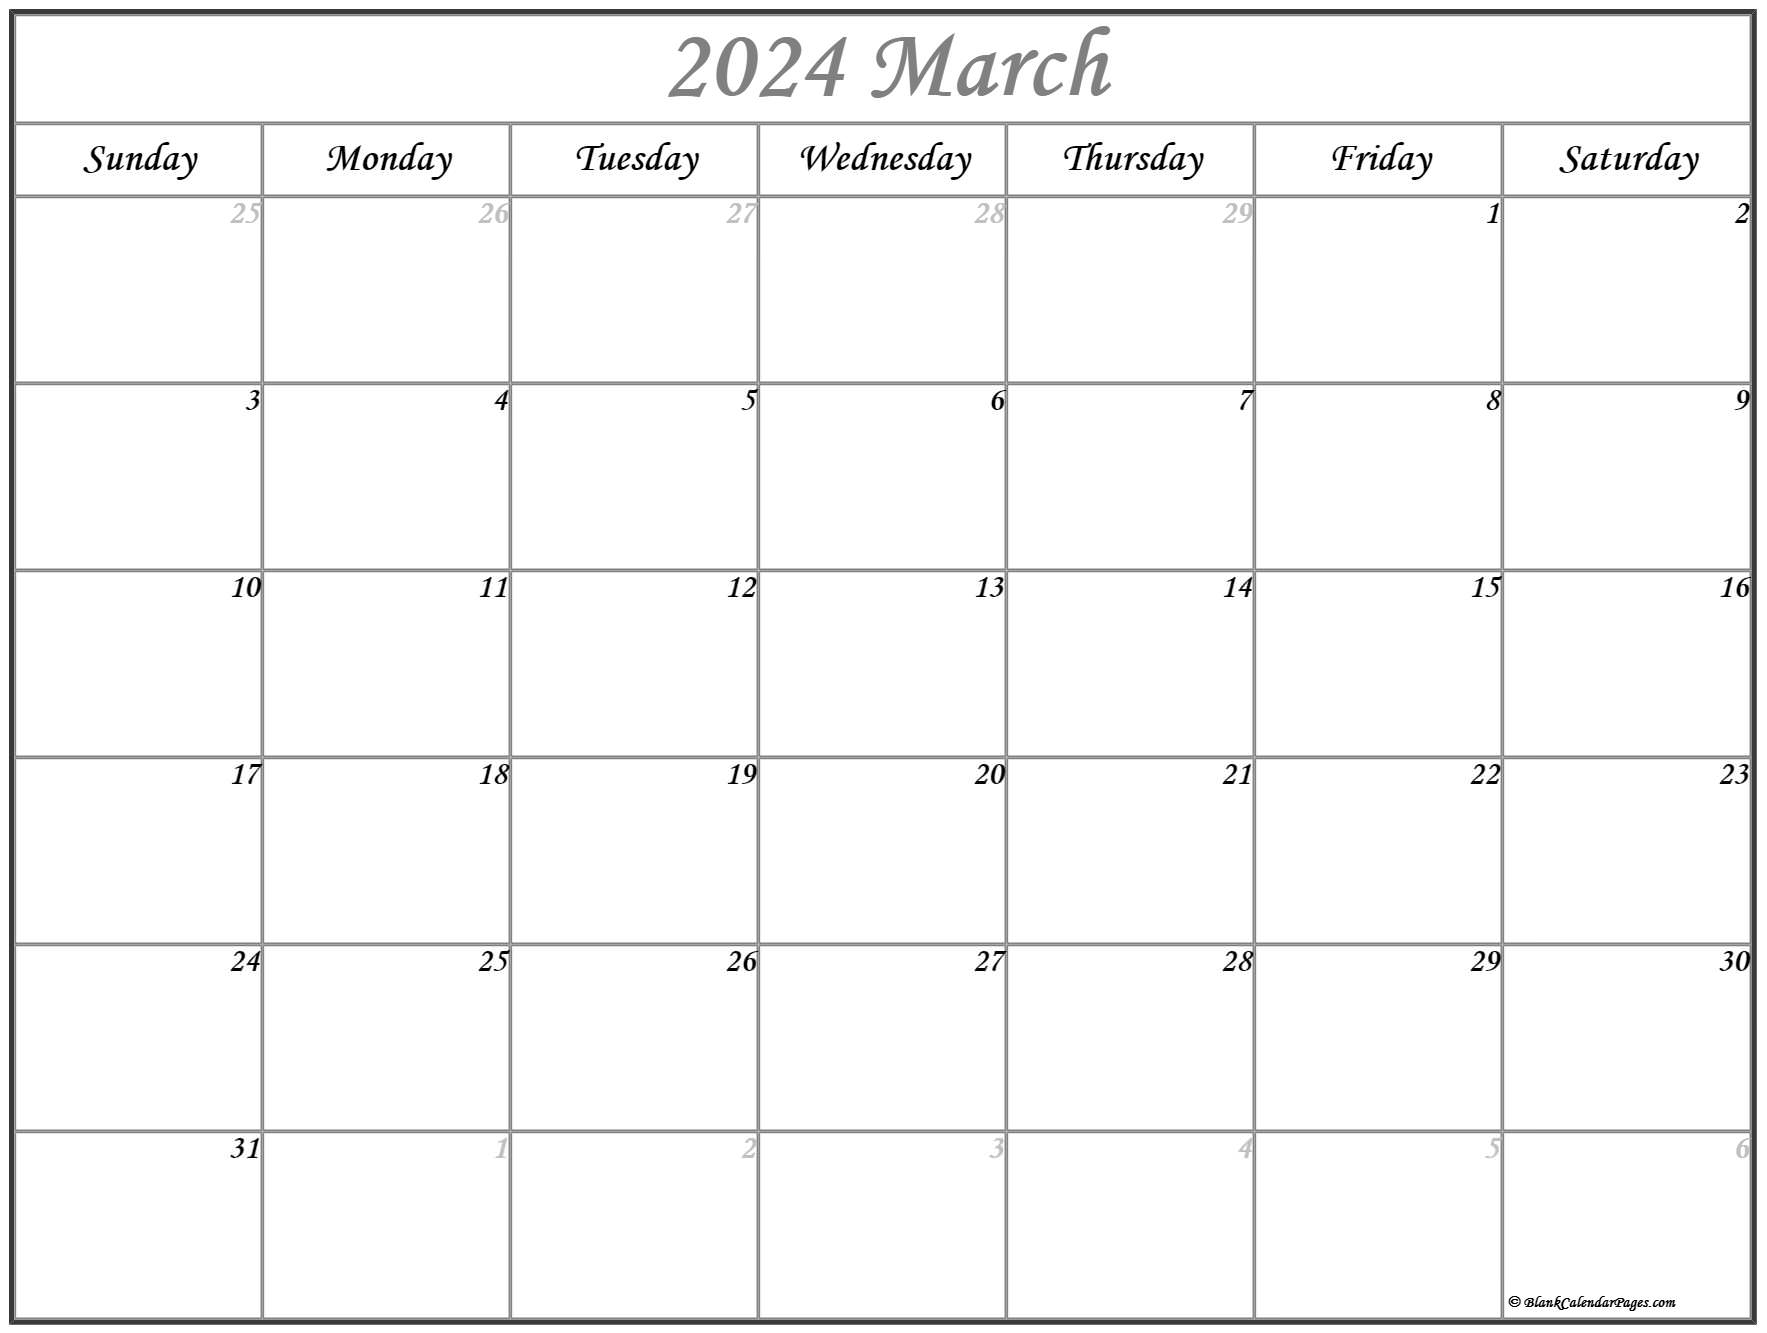 March 2023 calendar | free printable calendar